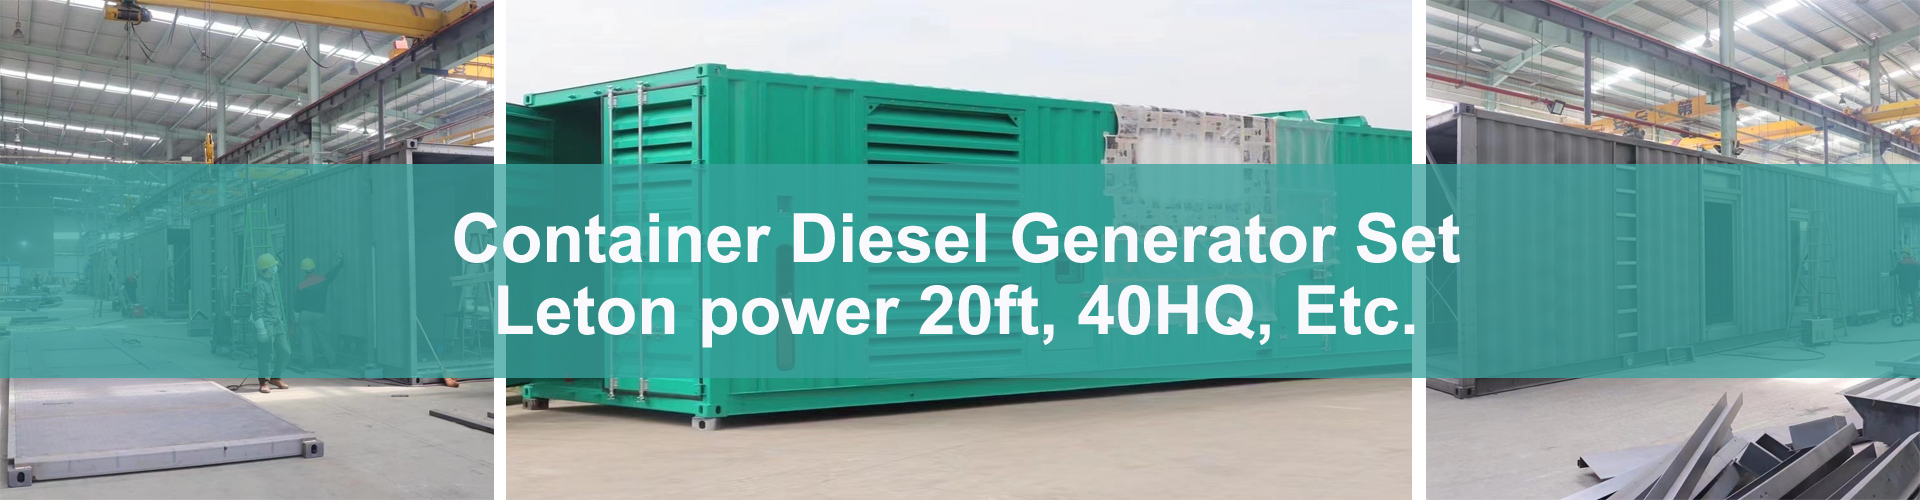 Ipu generator huinga hiko teihana diesel generator huinga 20ft 40HQ ipu hiko stationImage